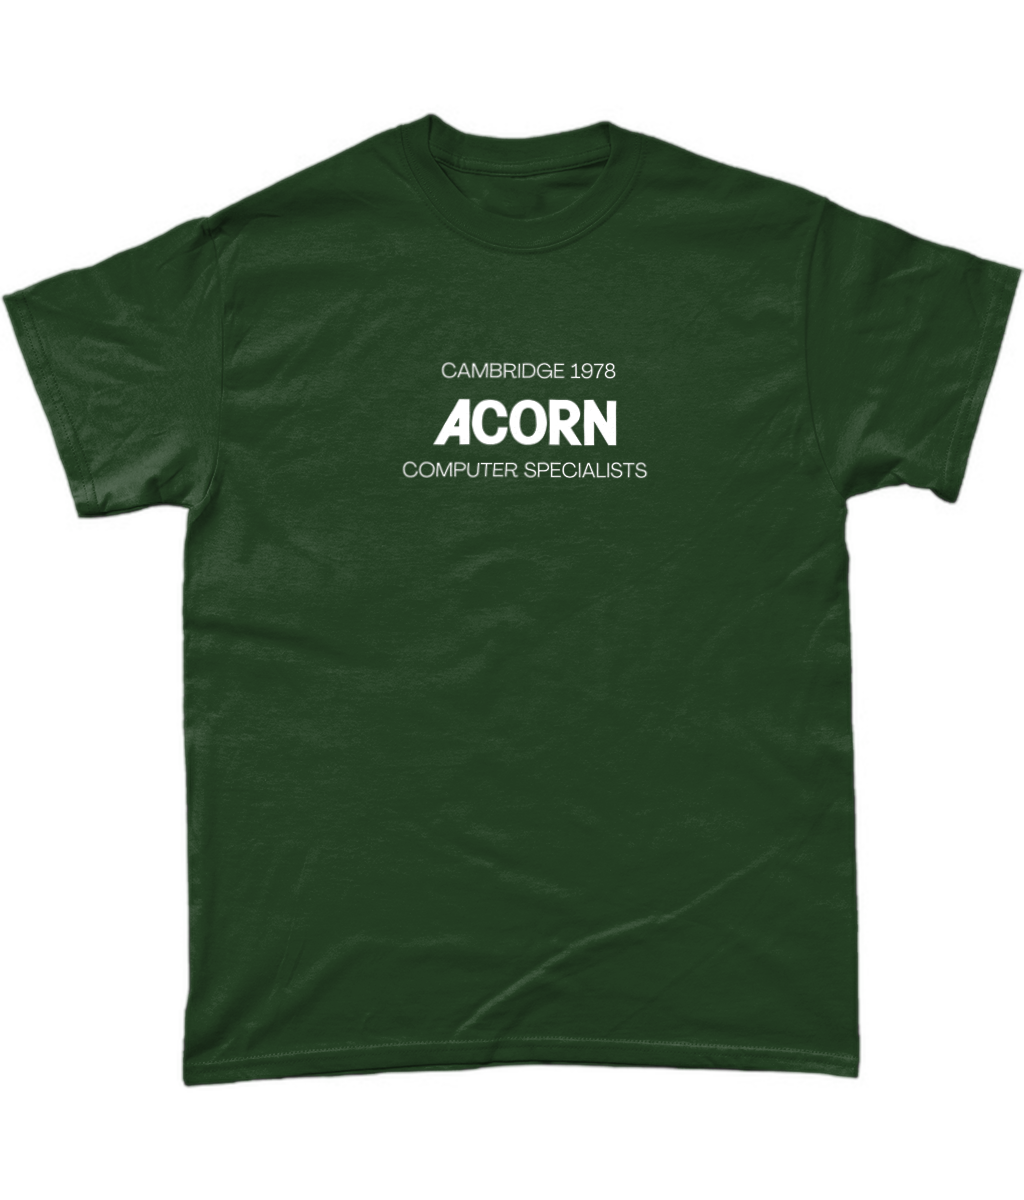 Green T-shirt saying  Cambridge ACORN 1978 Computer Specialists